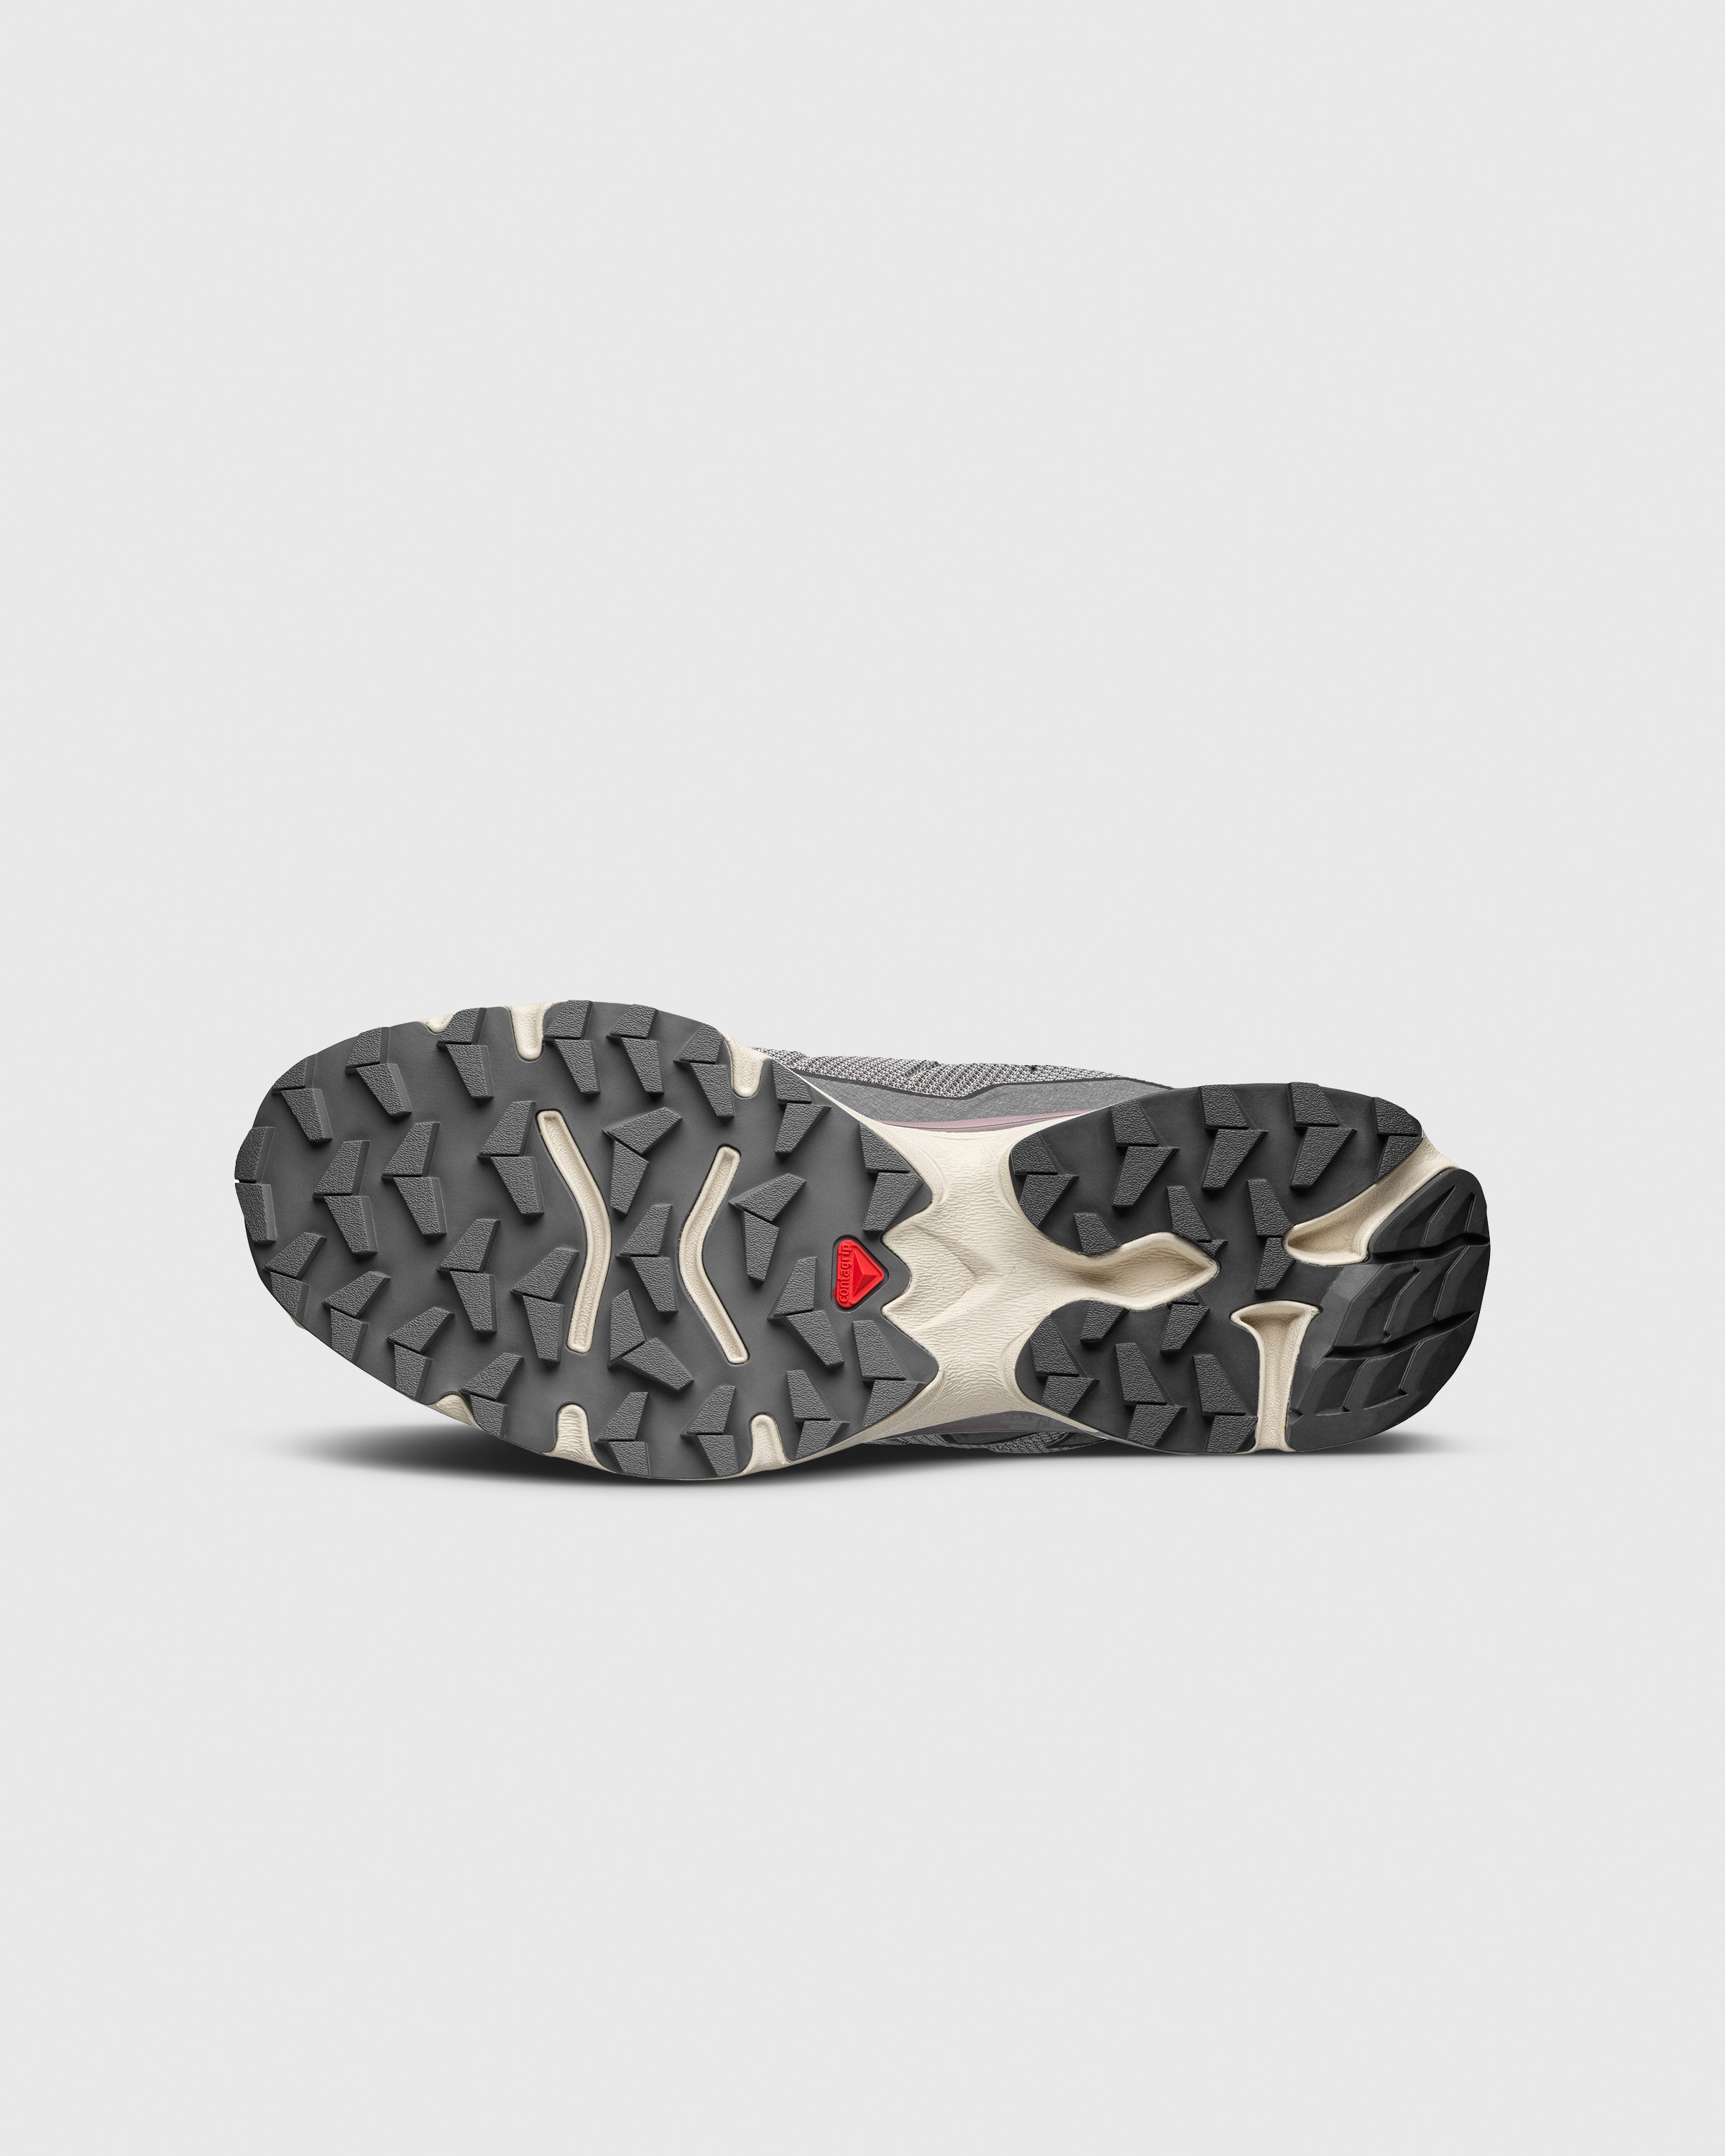 Salomon - XT-SLATE ADVANCED Gull/Moonscape - Footwear - Grey - Image 5